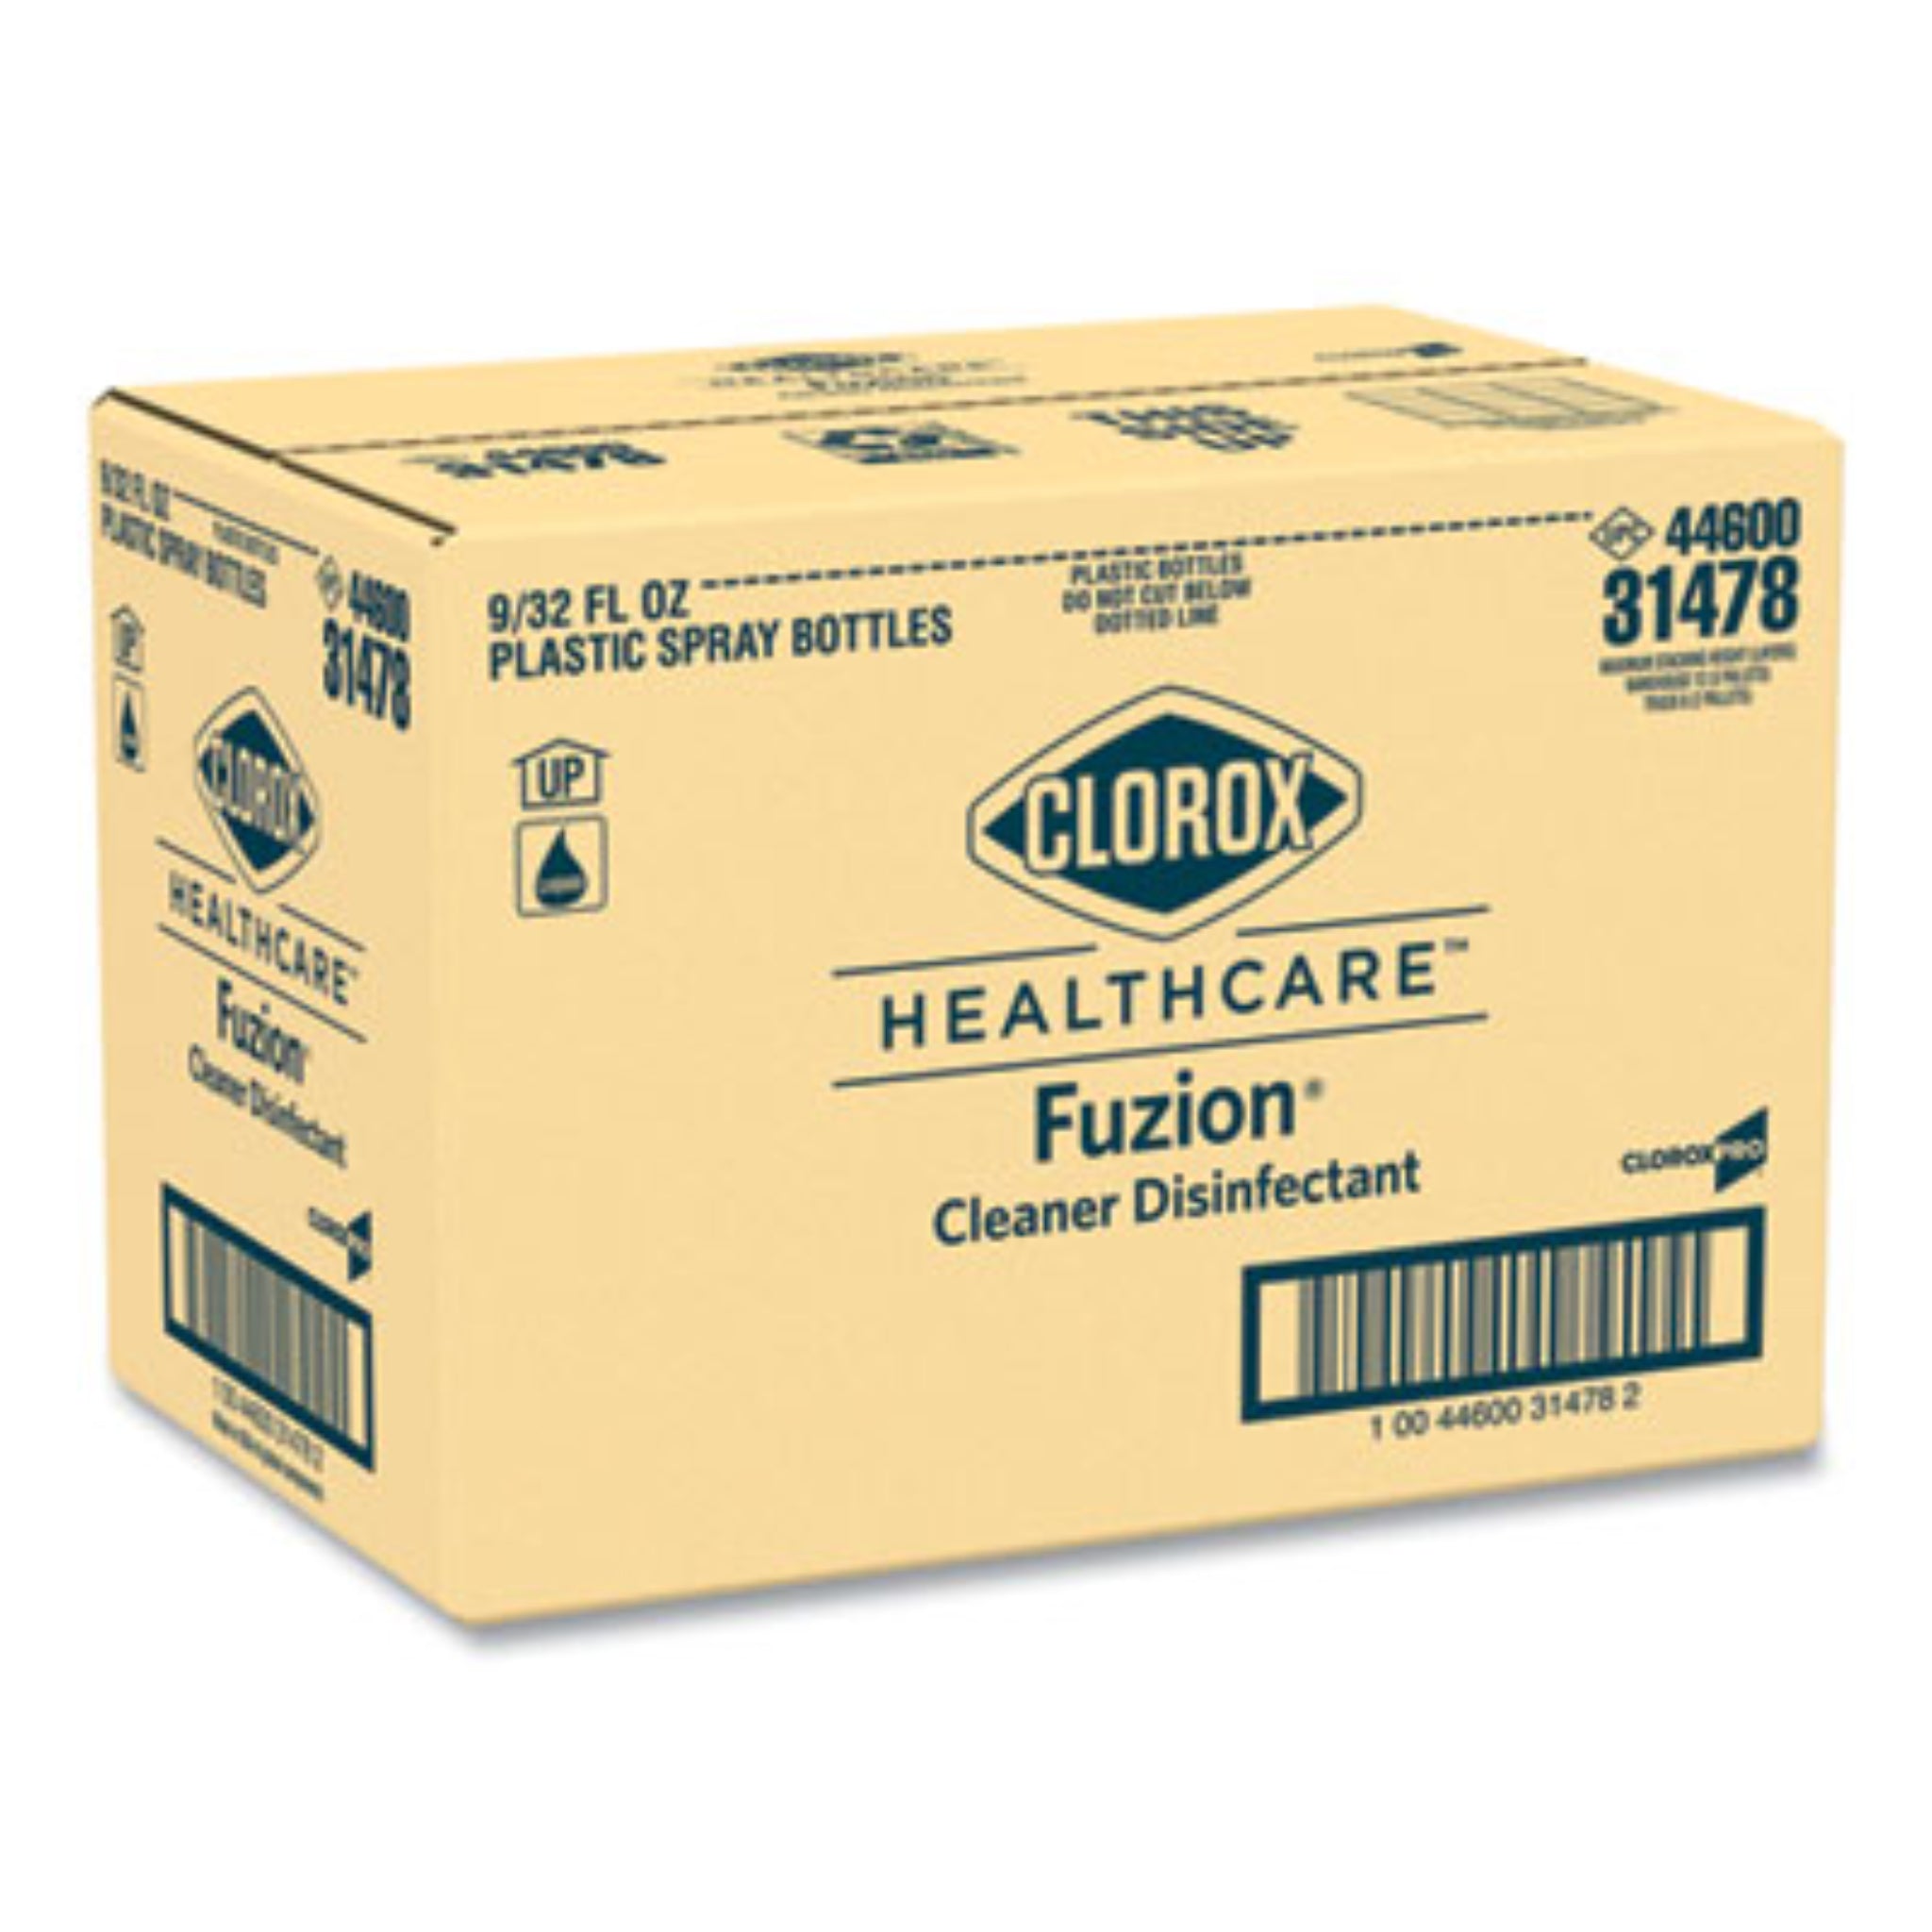 CLOROX SALES CO. CLO31478 Fuzion Cleaner Disinfectant, Carton